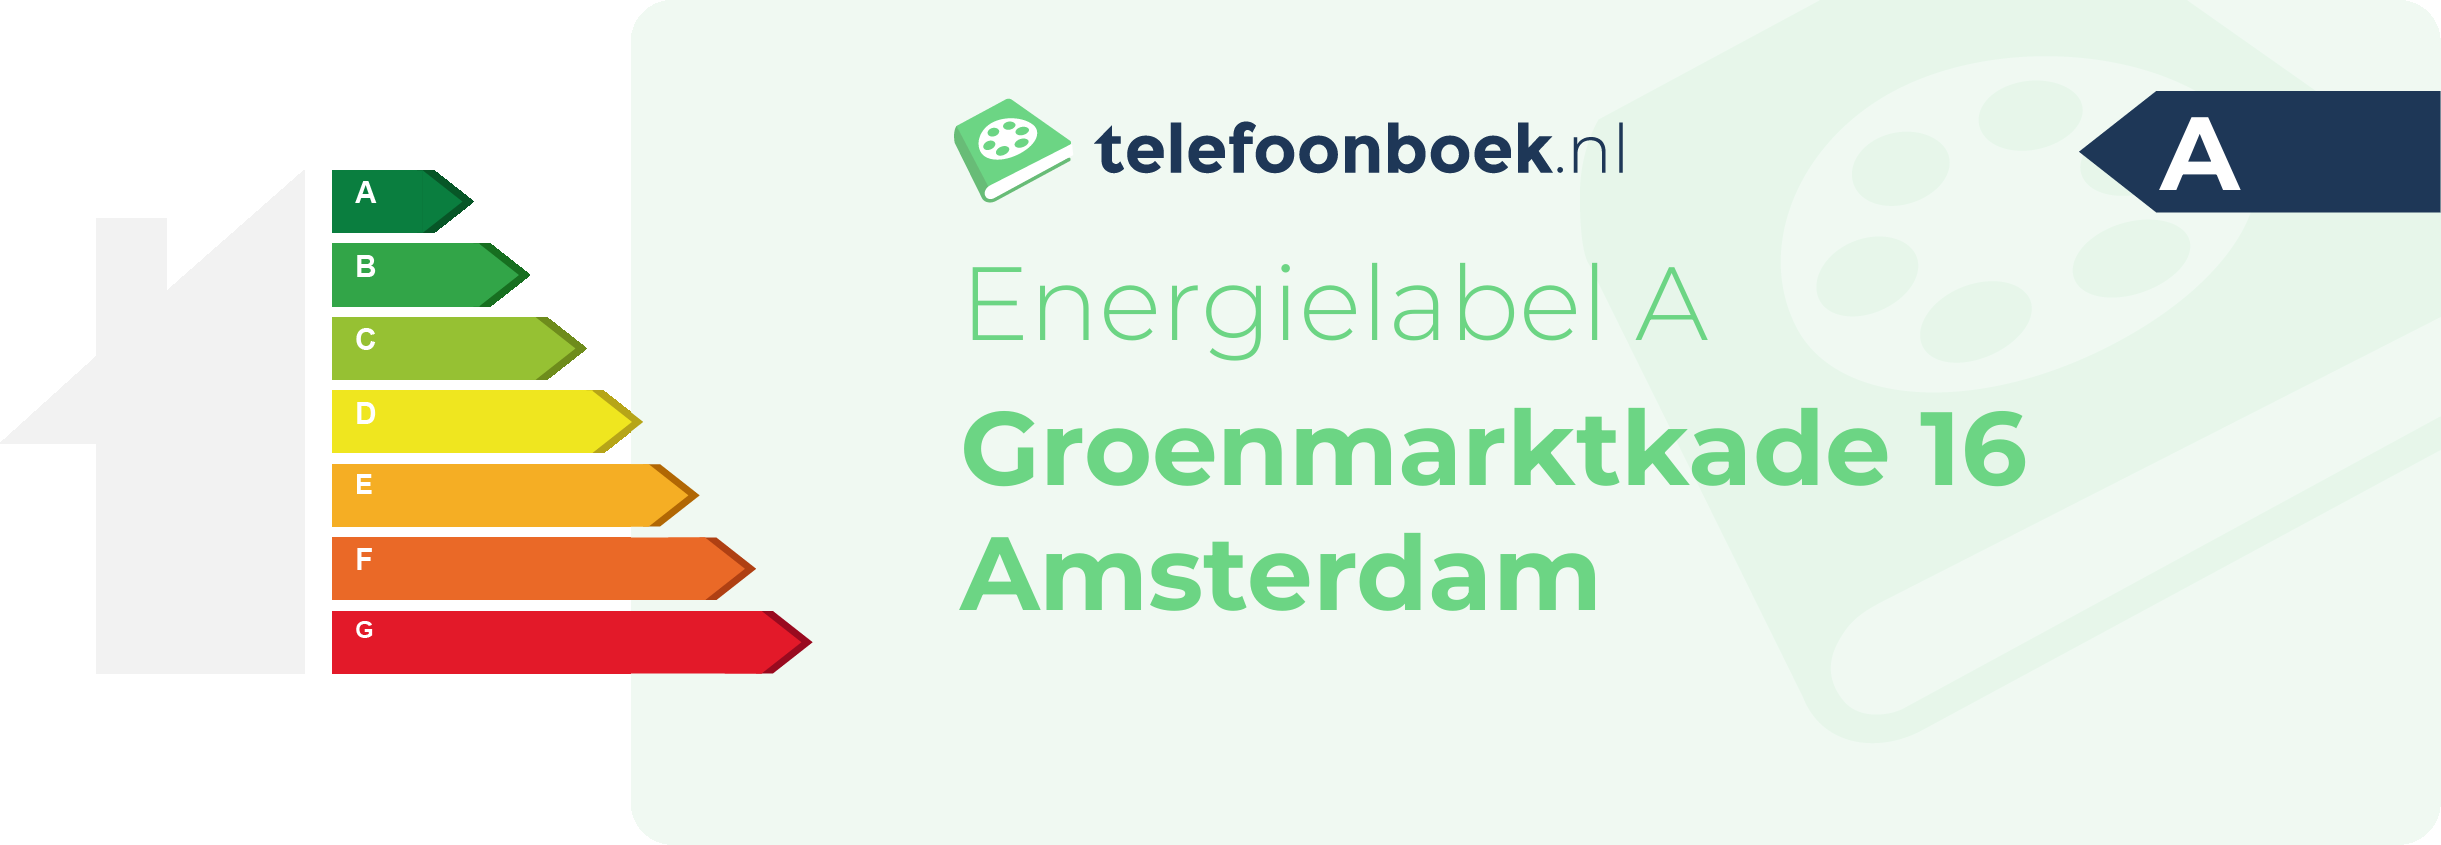 Energielabel Groenmarktkade 16 Amsterdam